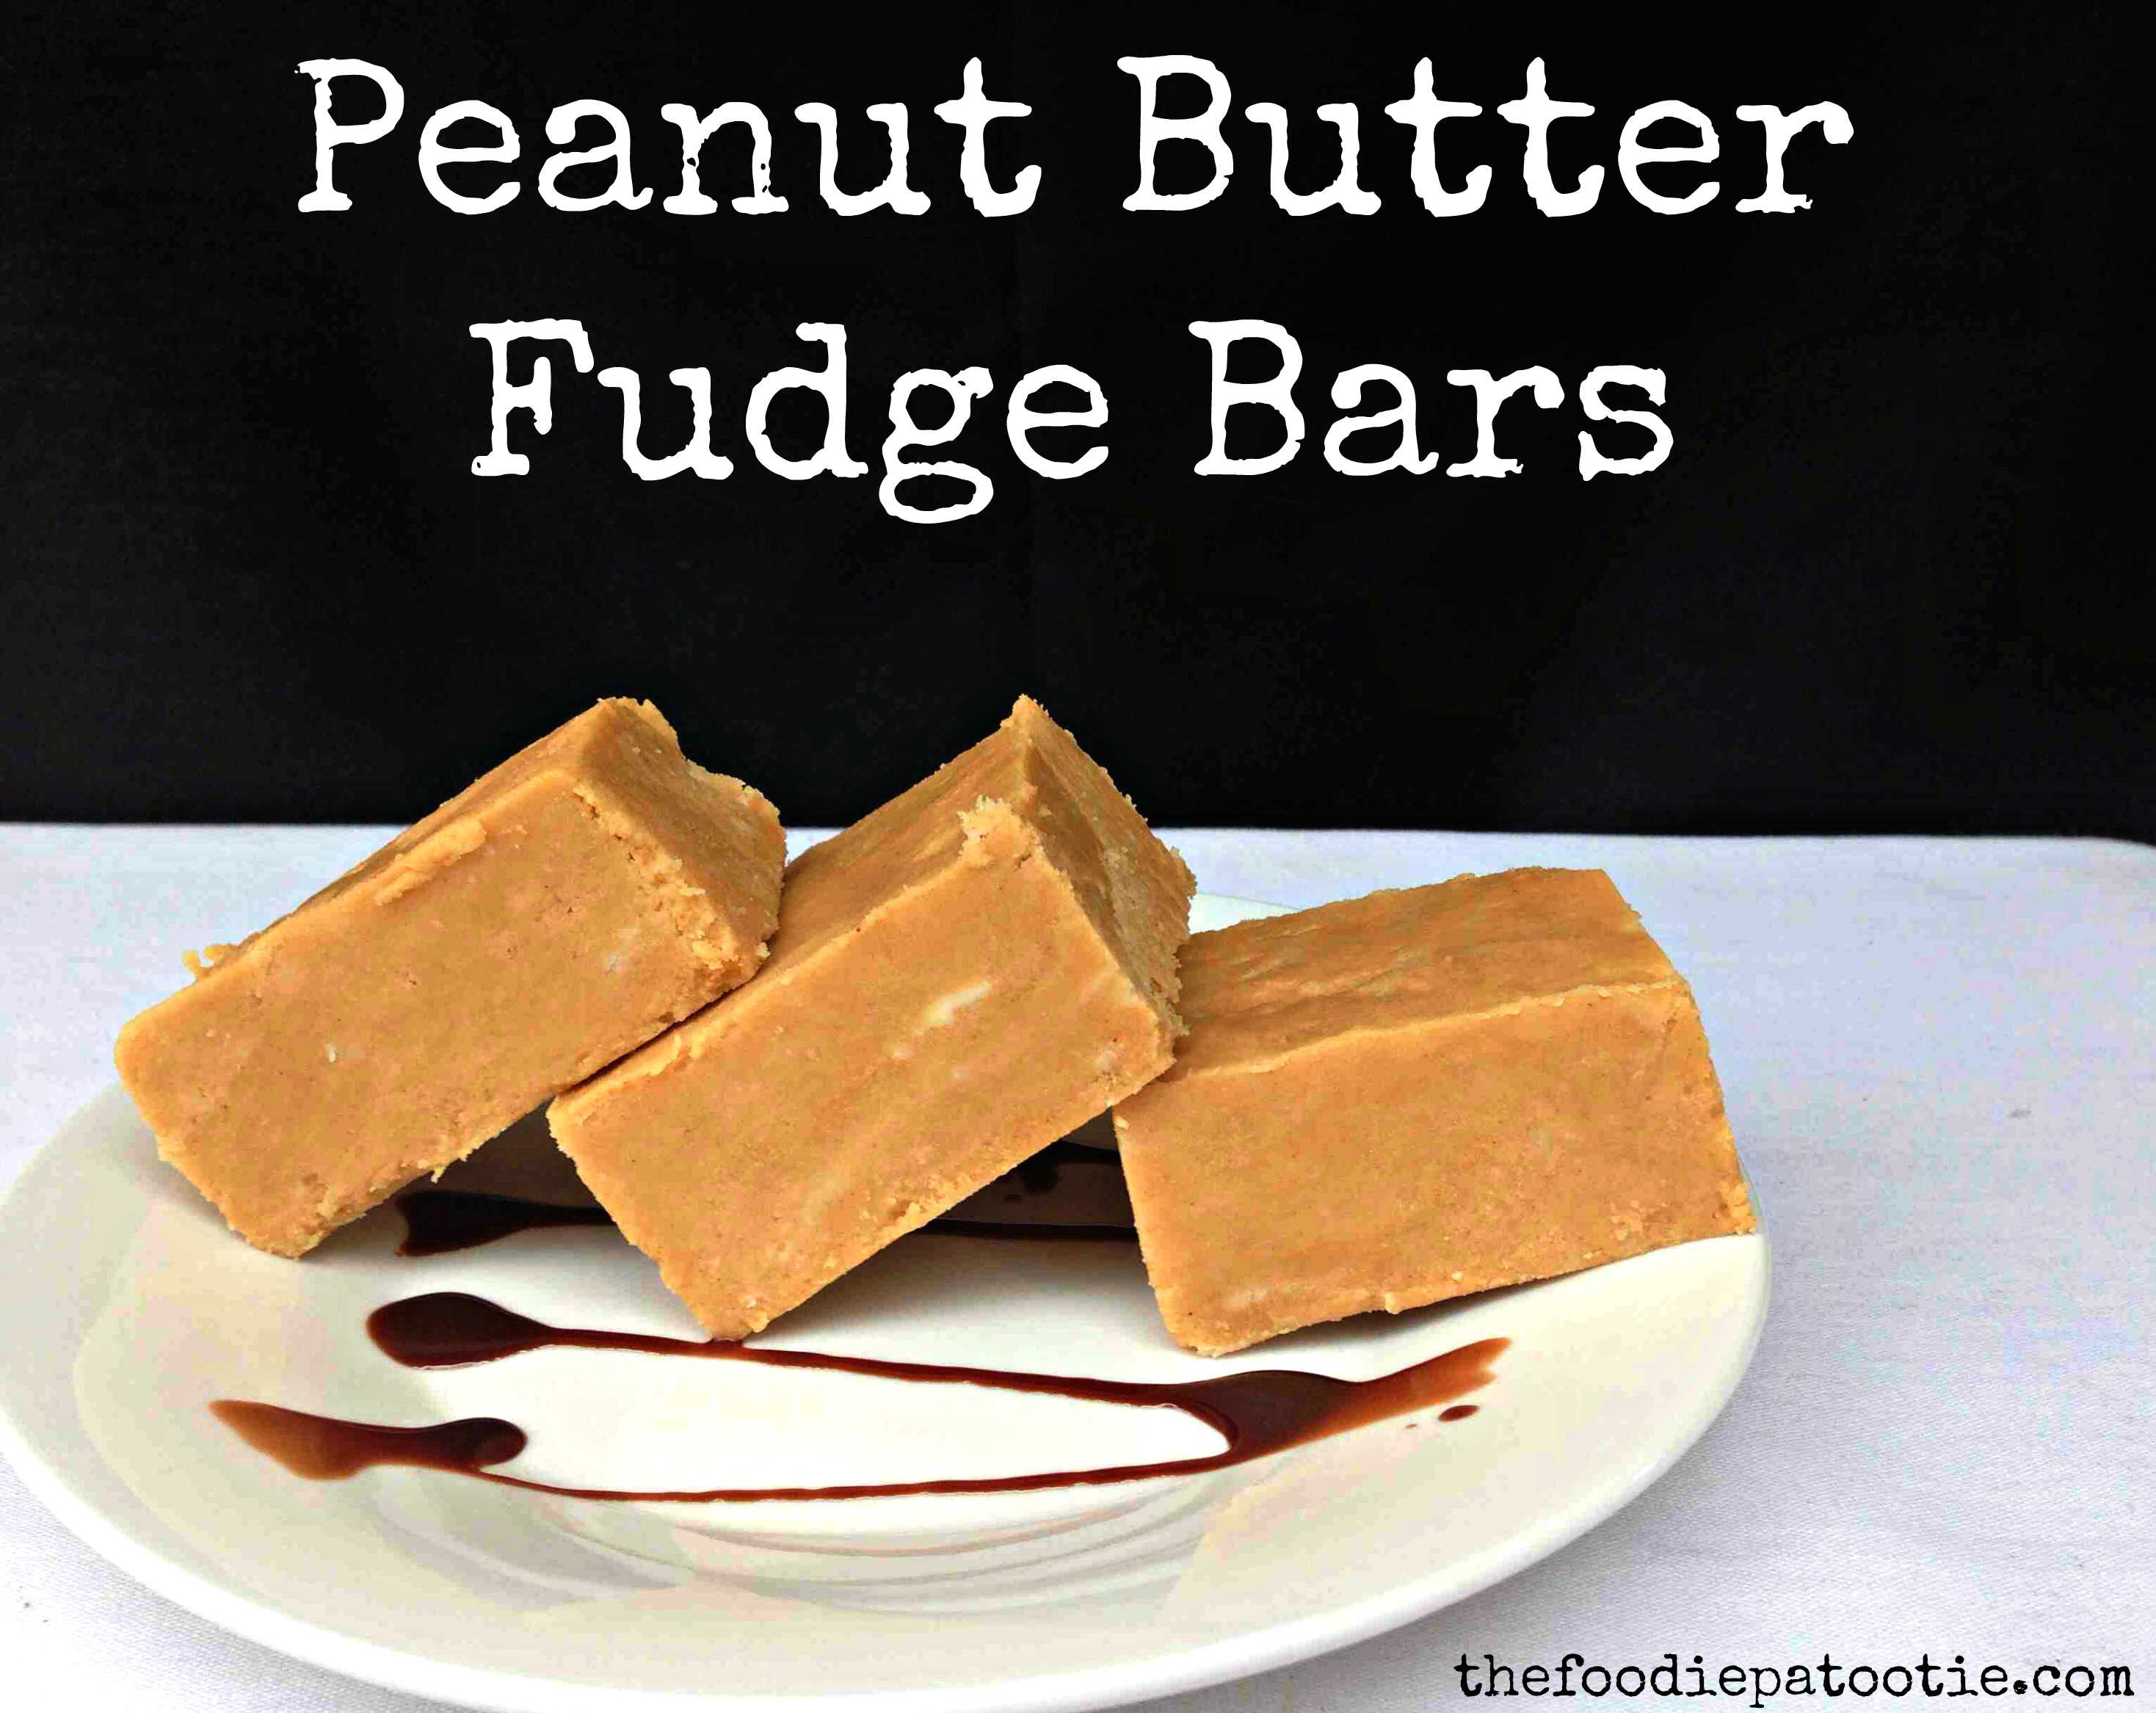 National Peanut Butter Fudge Day Peanut Butter Fudge Bars.